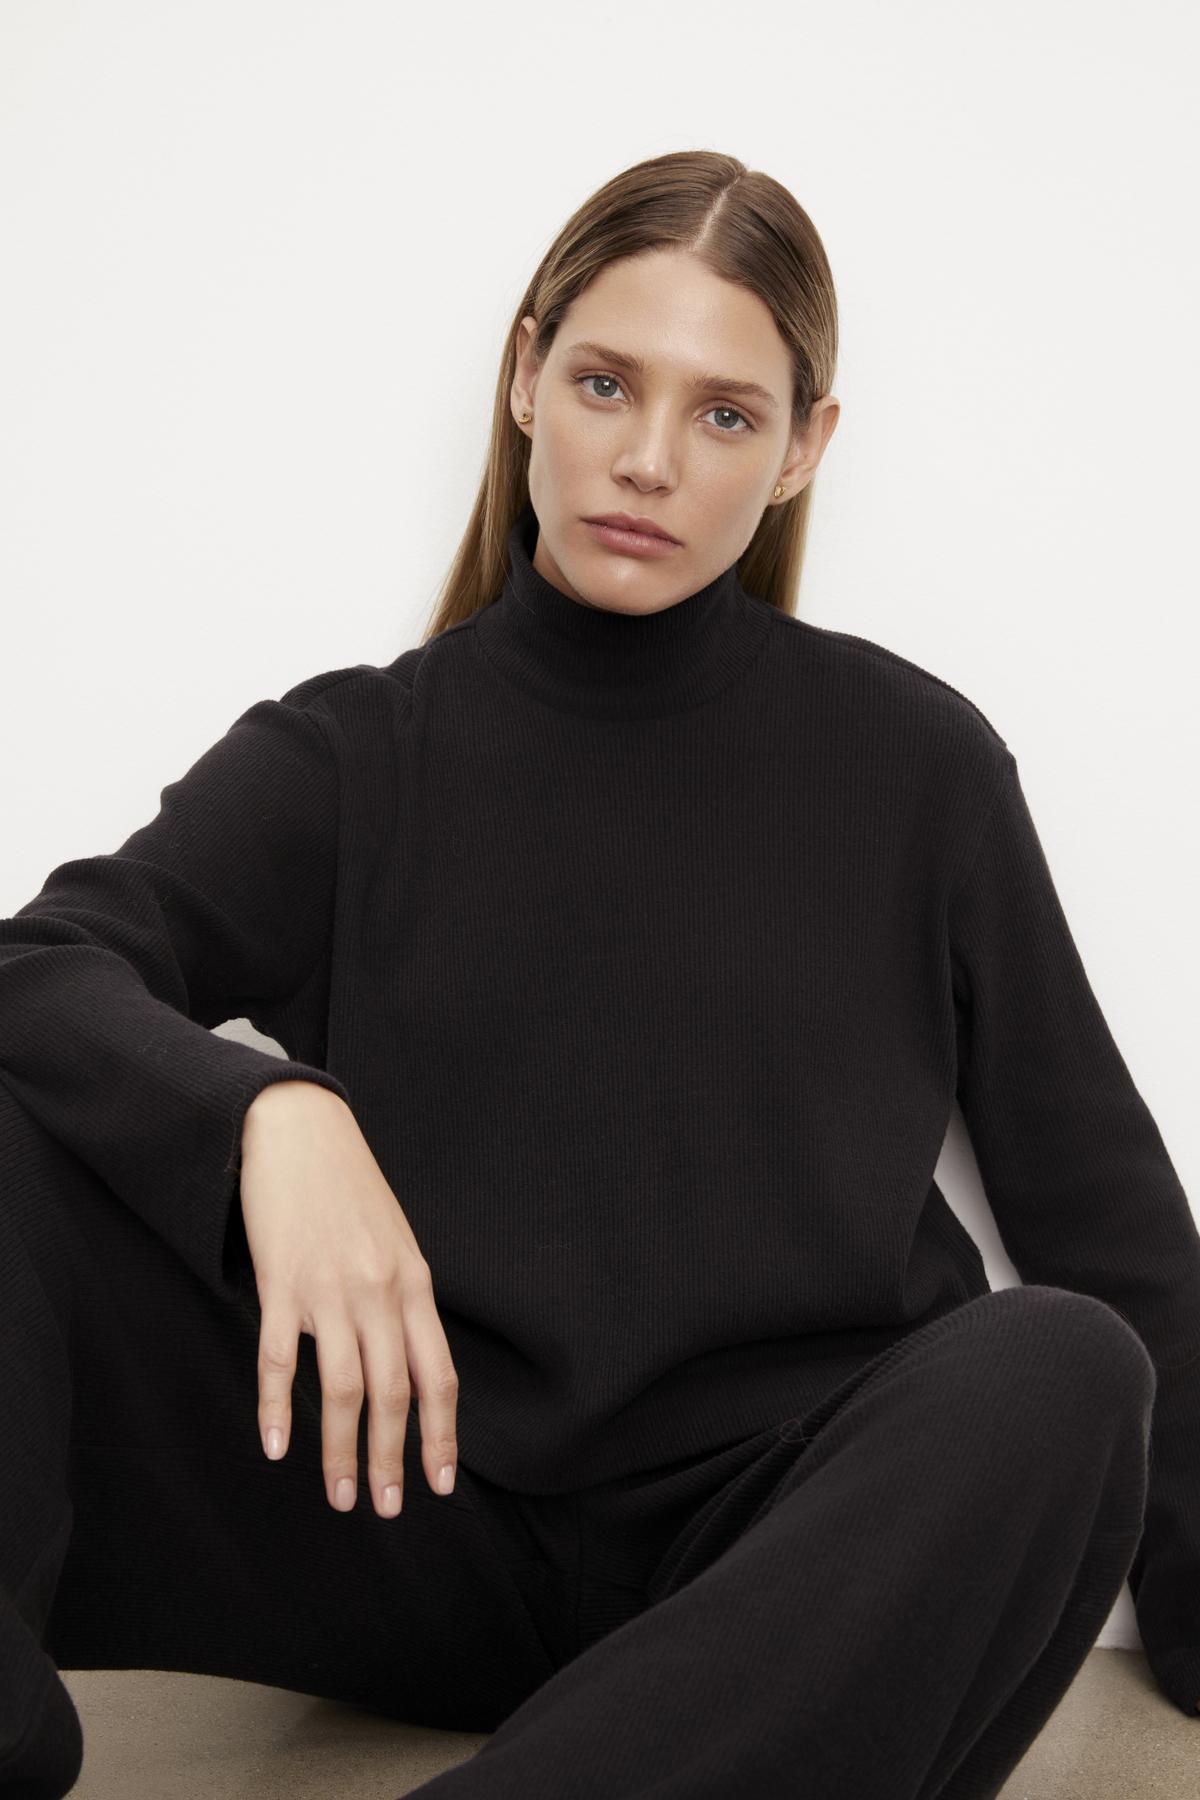 A model wearing a black Velvet by Graham & Spencer ALEC BRUSHED RIB MOCK NECK TOP and sweatpants.-35701823570113